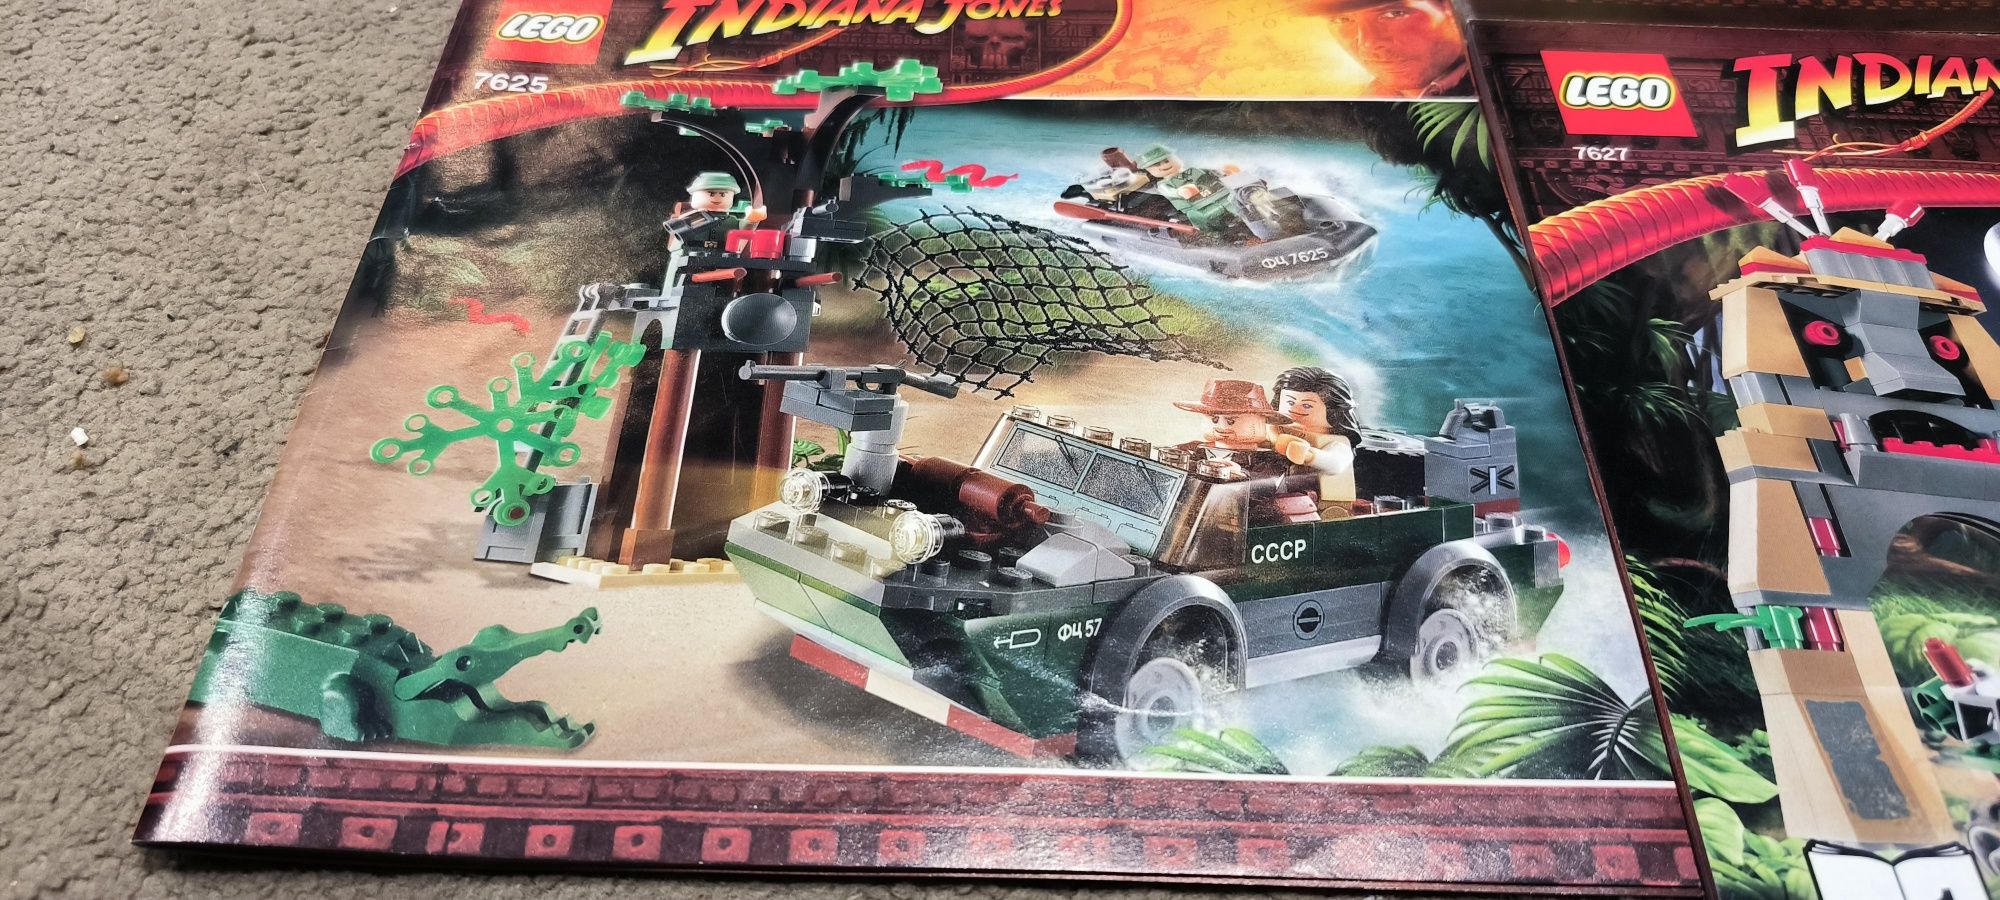 Lego 7625 Indiana Jones